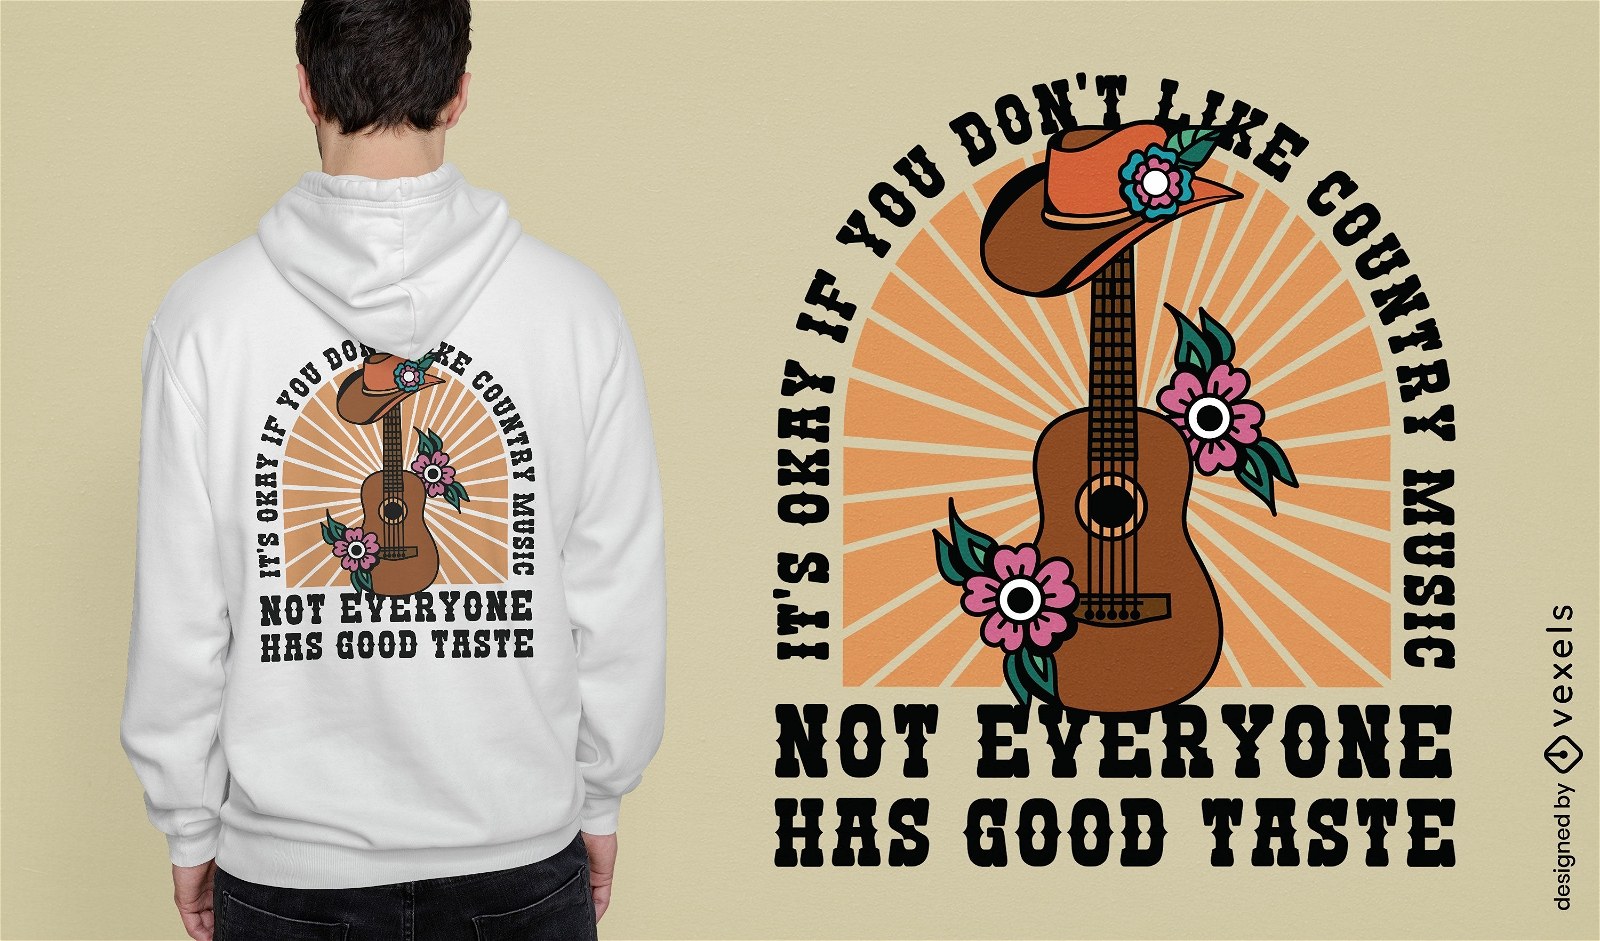 Country music guitar t-shirt design